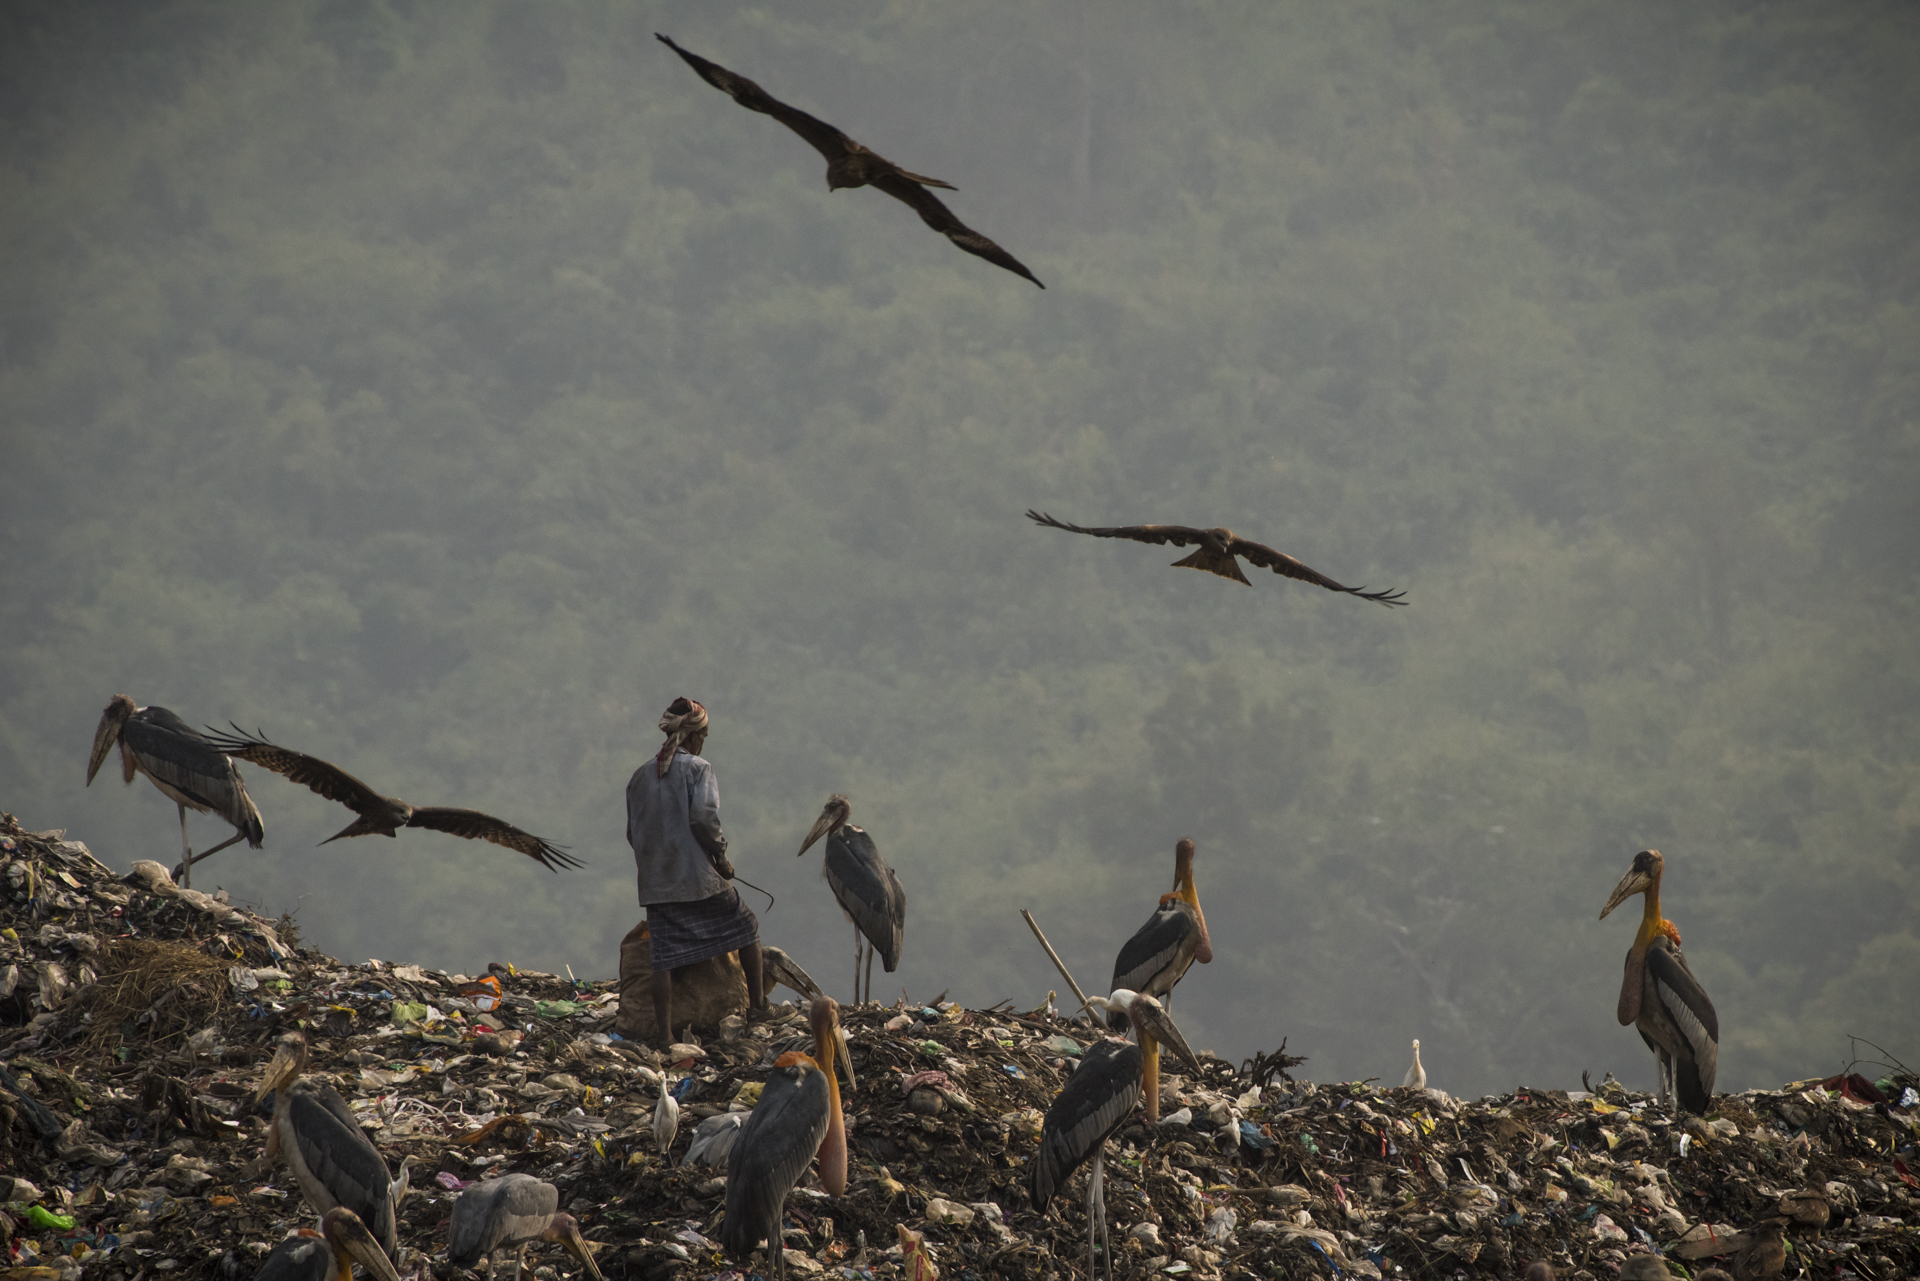 Humans, Greater Adjutant Storks and Black Kites at a garbage dump in Guwahati